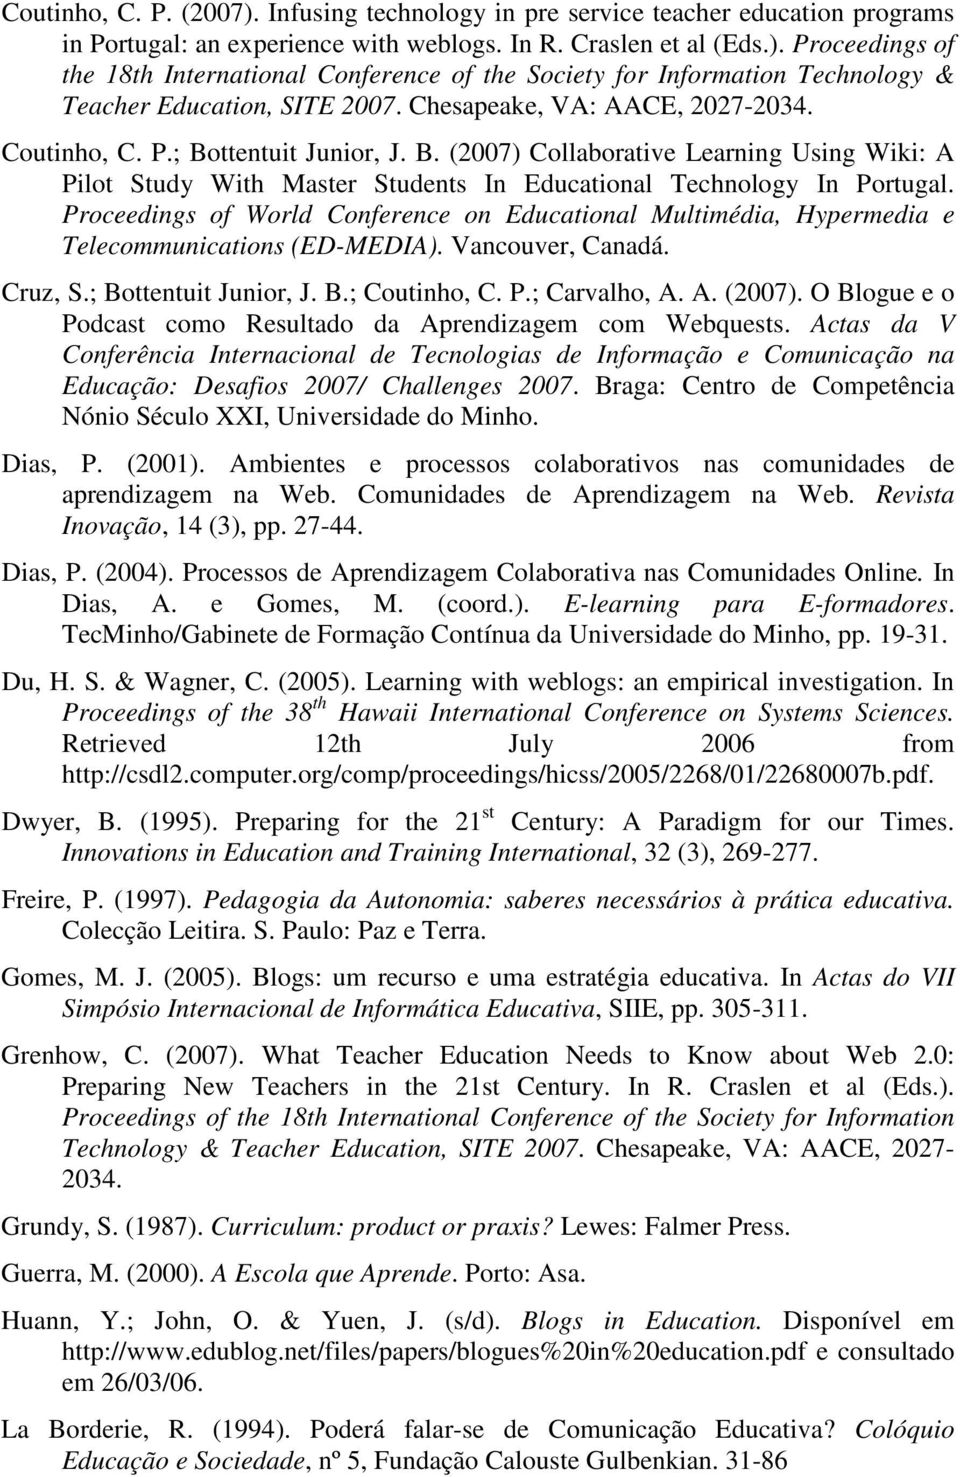 Proceedings of World Conference on Educational Multimédia, Hypermedia e Telecommunications (ED-MEDIA). Vancouver, Canadá. Cruz, S.; Bottentuit Junior, J. B.; Coutinho, C. P.; Carvalho, A. A. (2007).